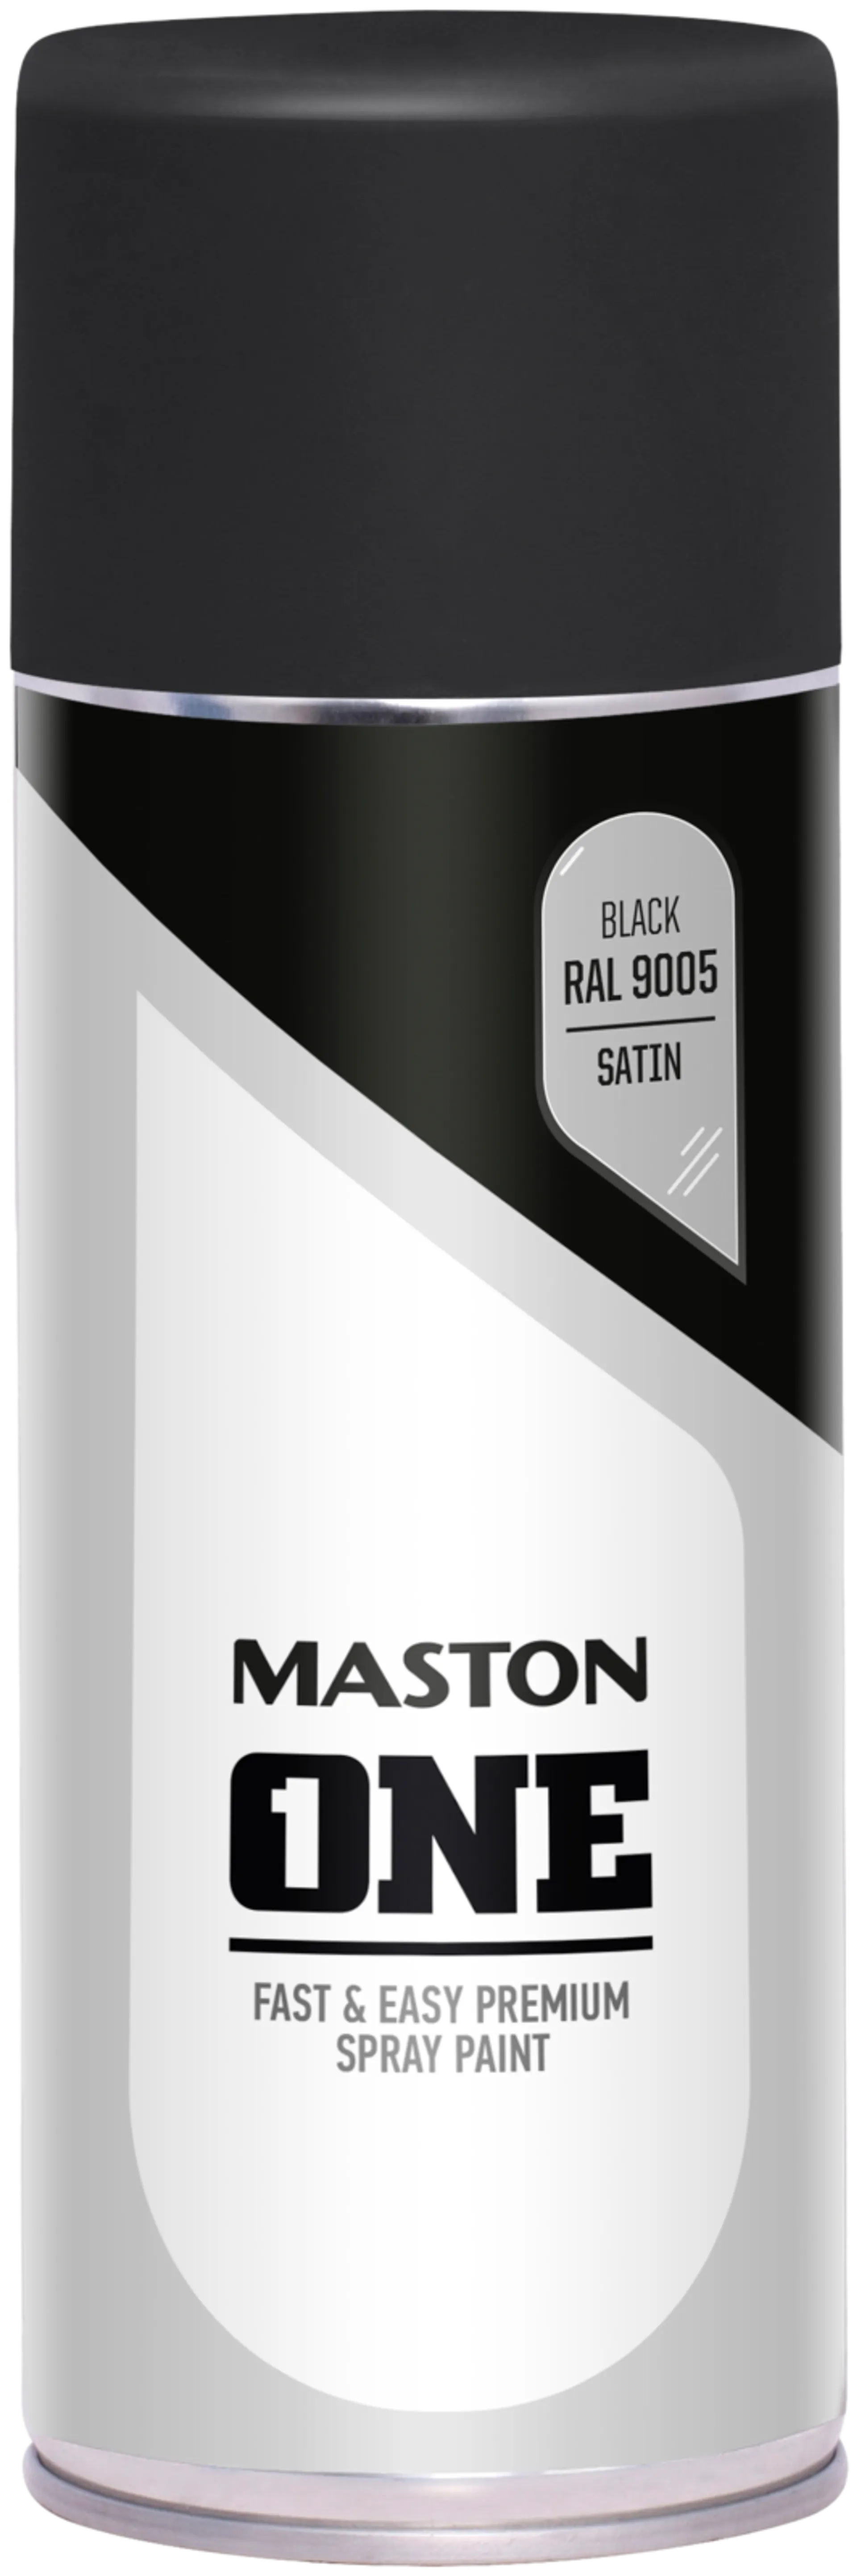 Maston One spraymaali musta 400ml RAL 9005